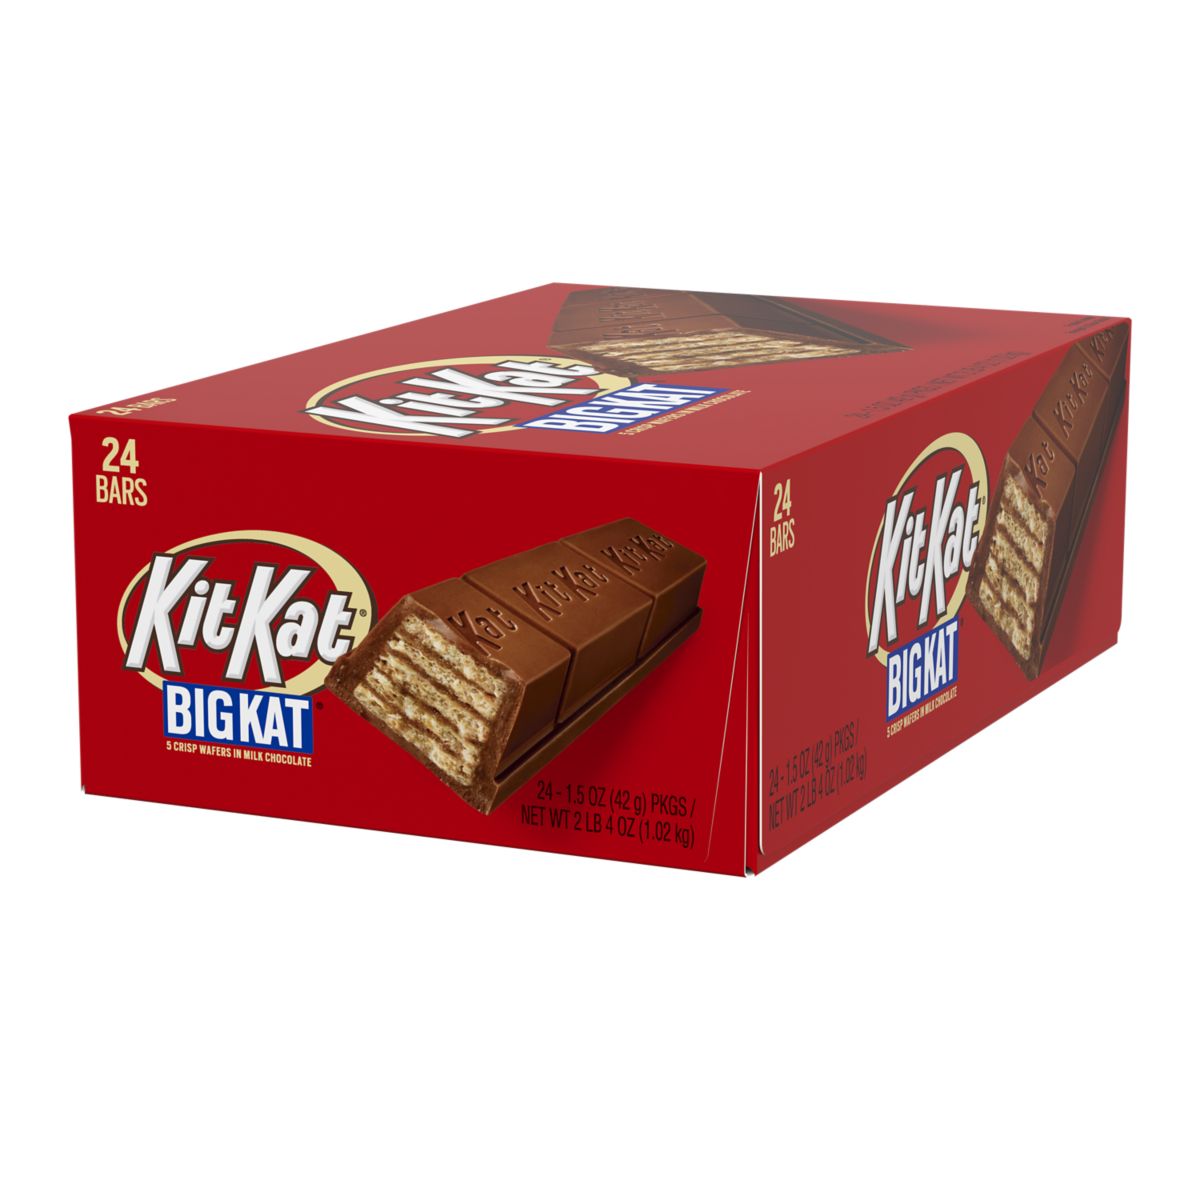 Kit Kat Crisp Wafers in Milk Chocolate, Big Kat - 24 pack, 1.5 oz packages